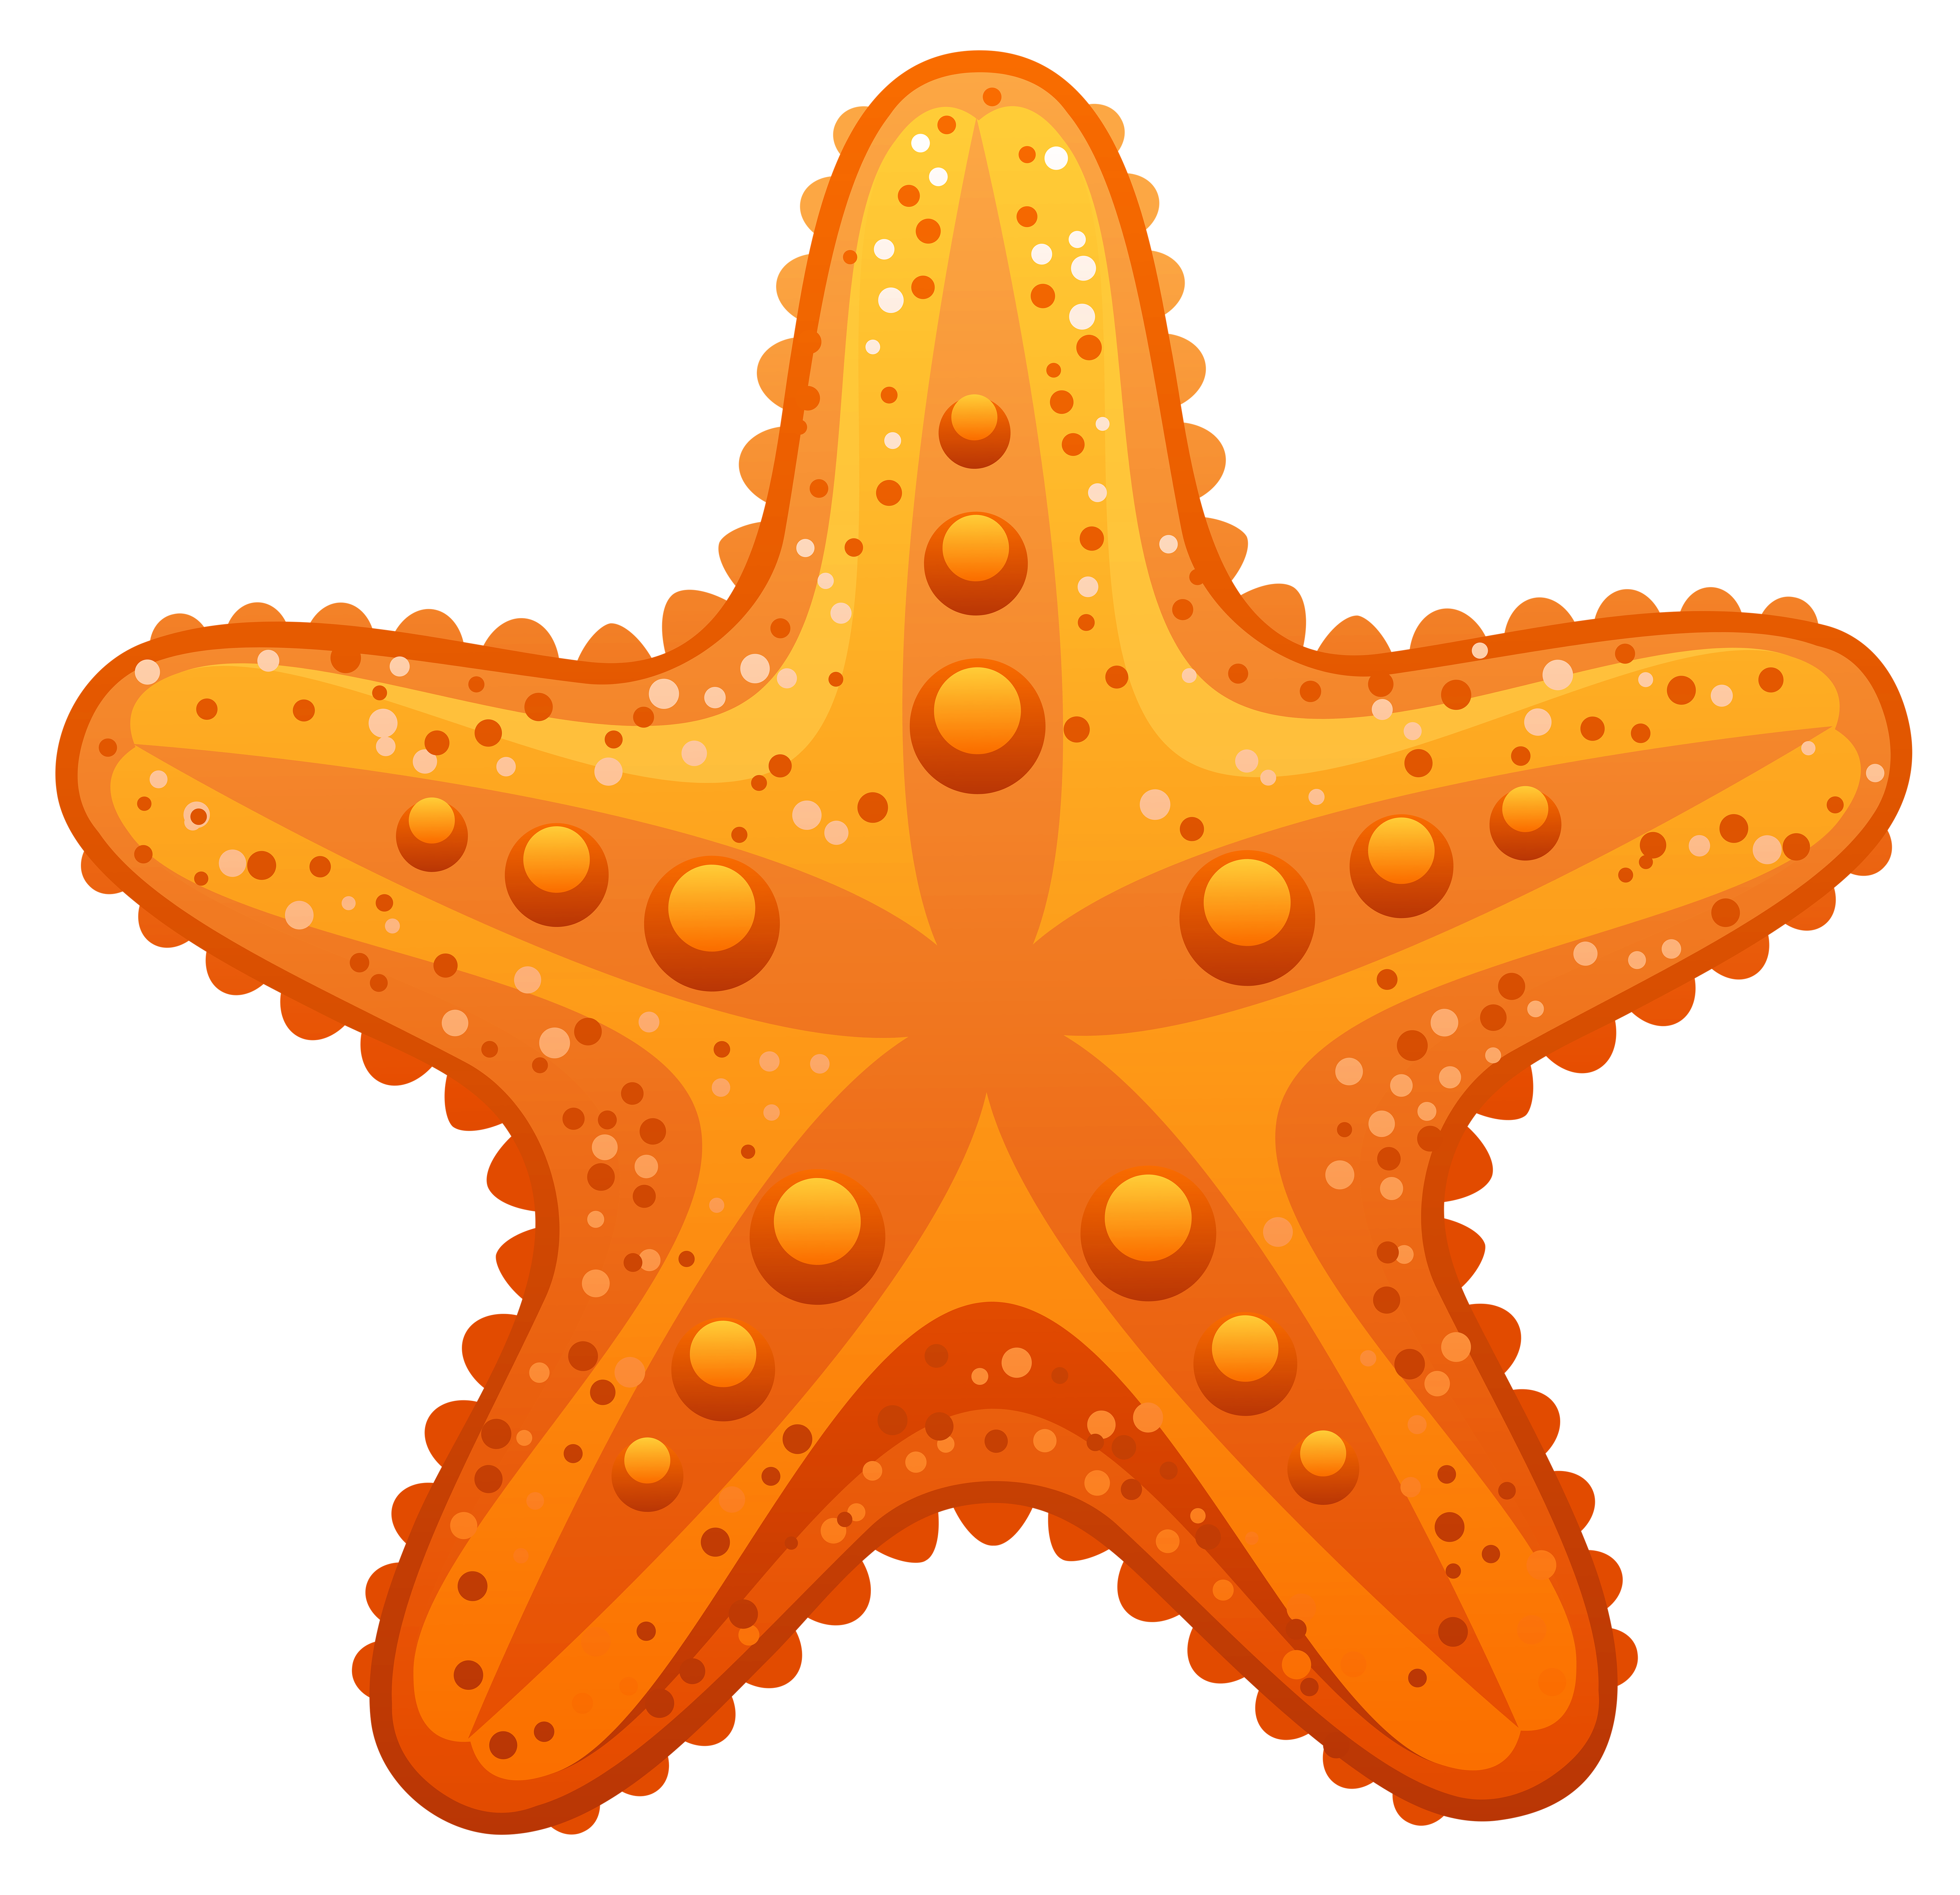 Sandy Starfish Clip Art At Cl